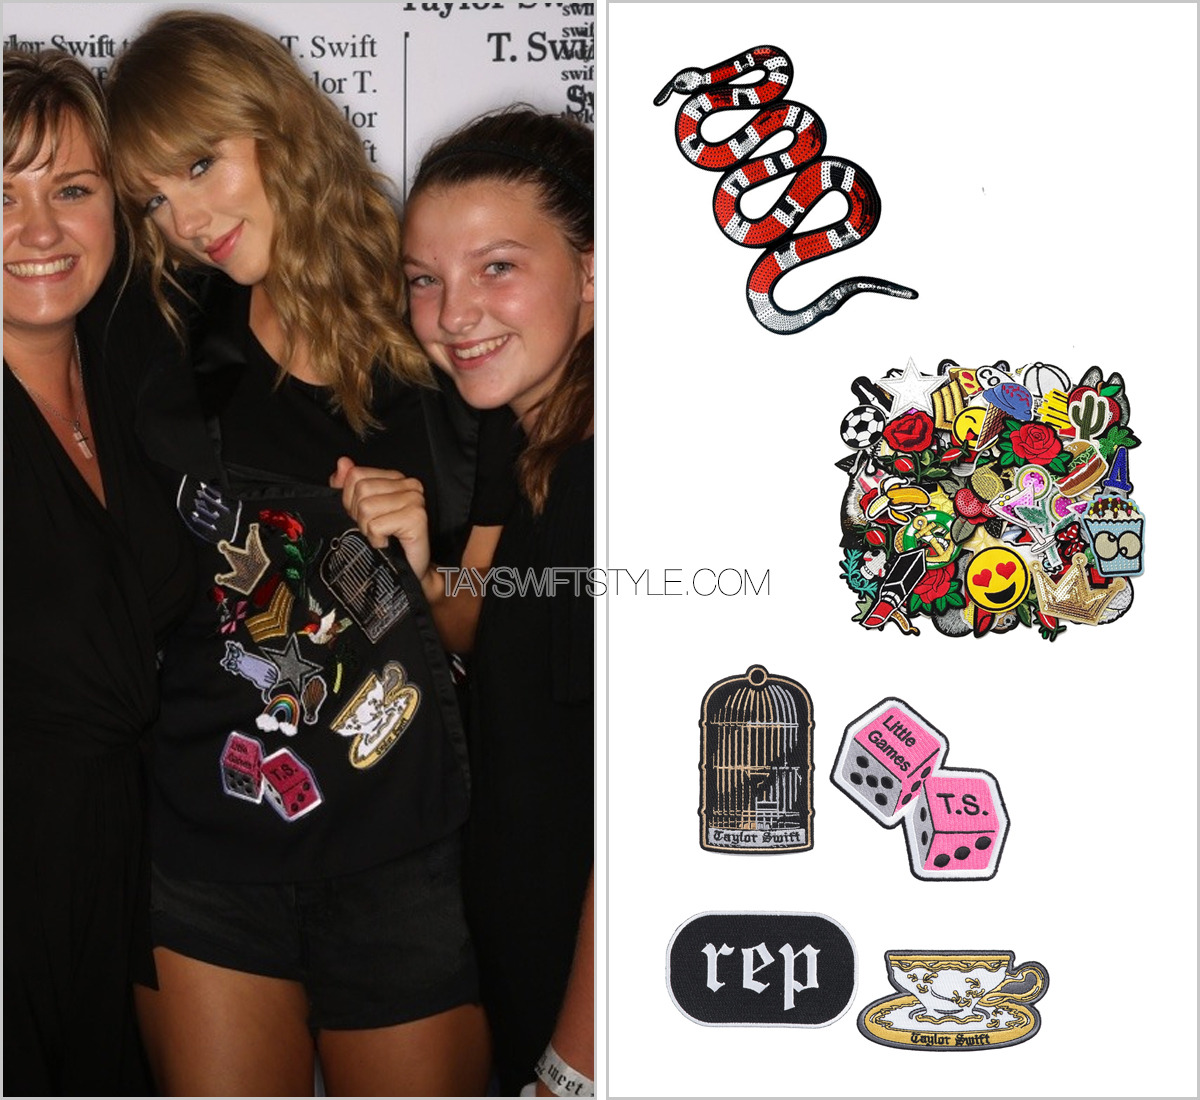 Taylor Swift Style — Reputation Tour Meet & Greet